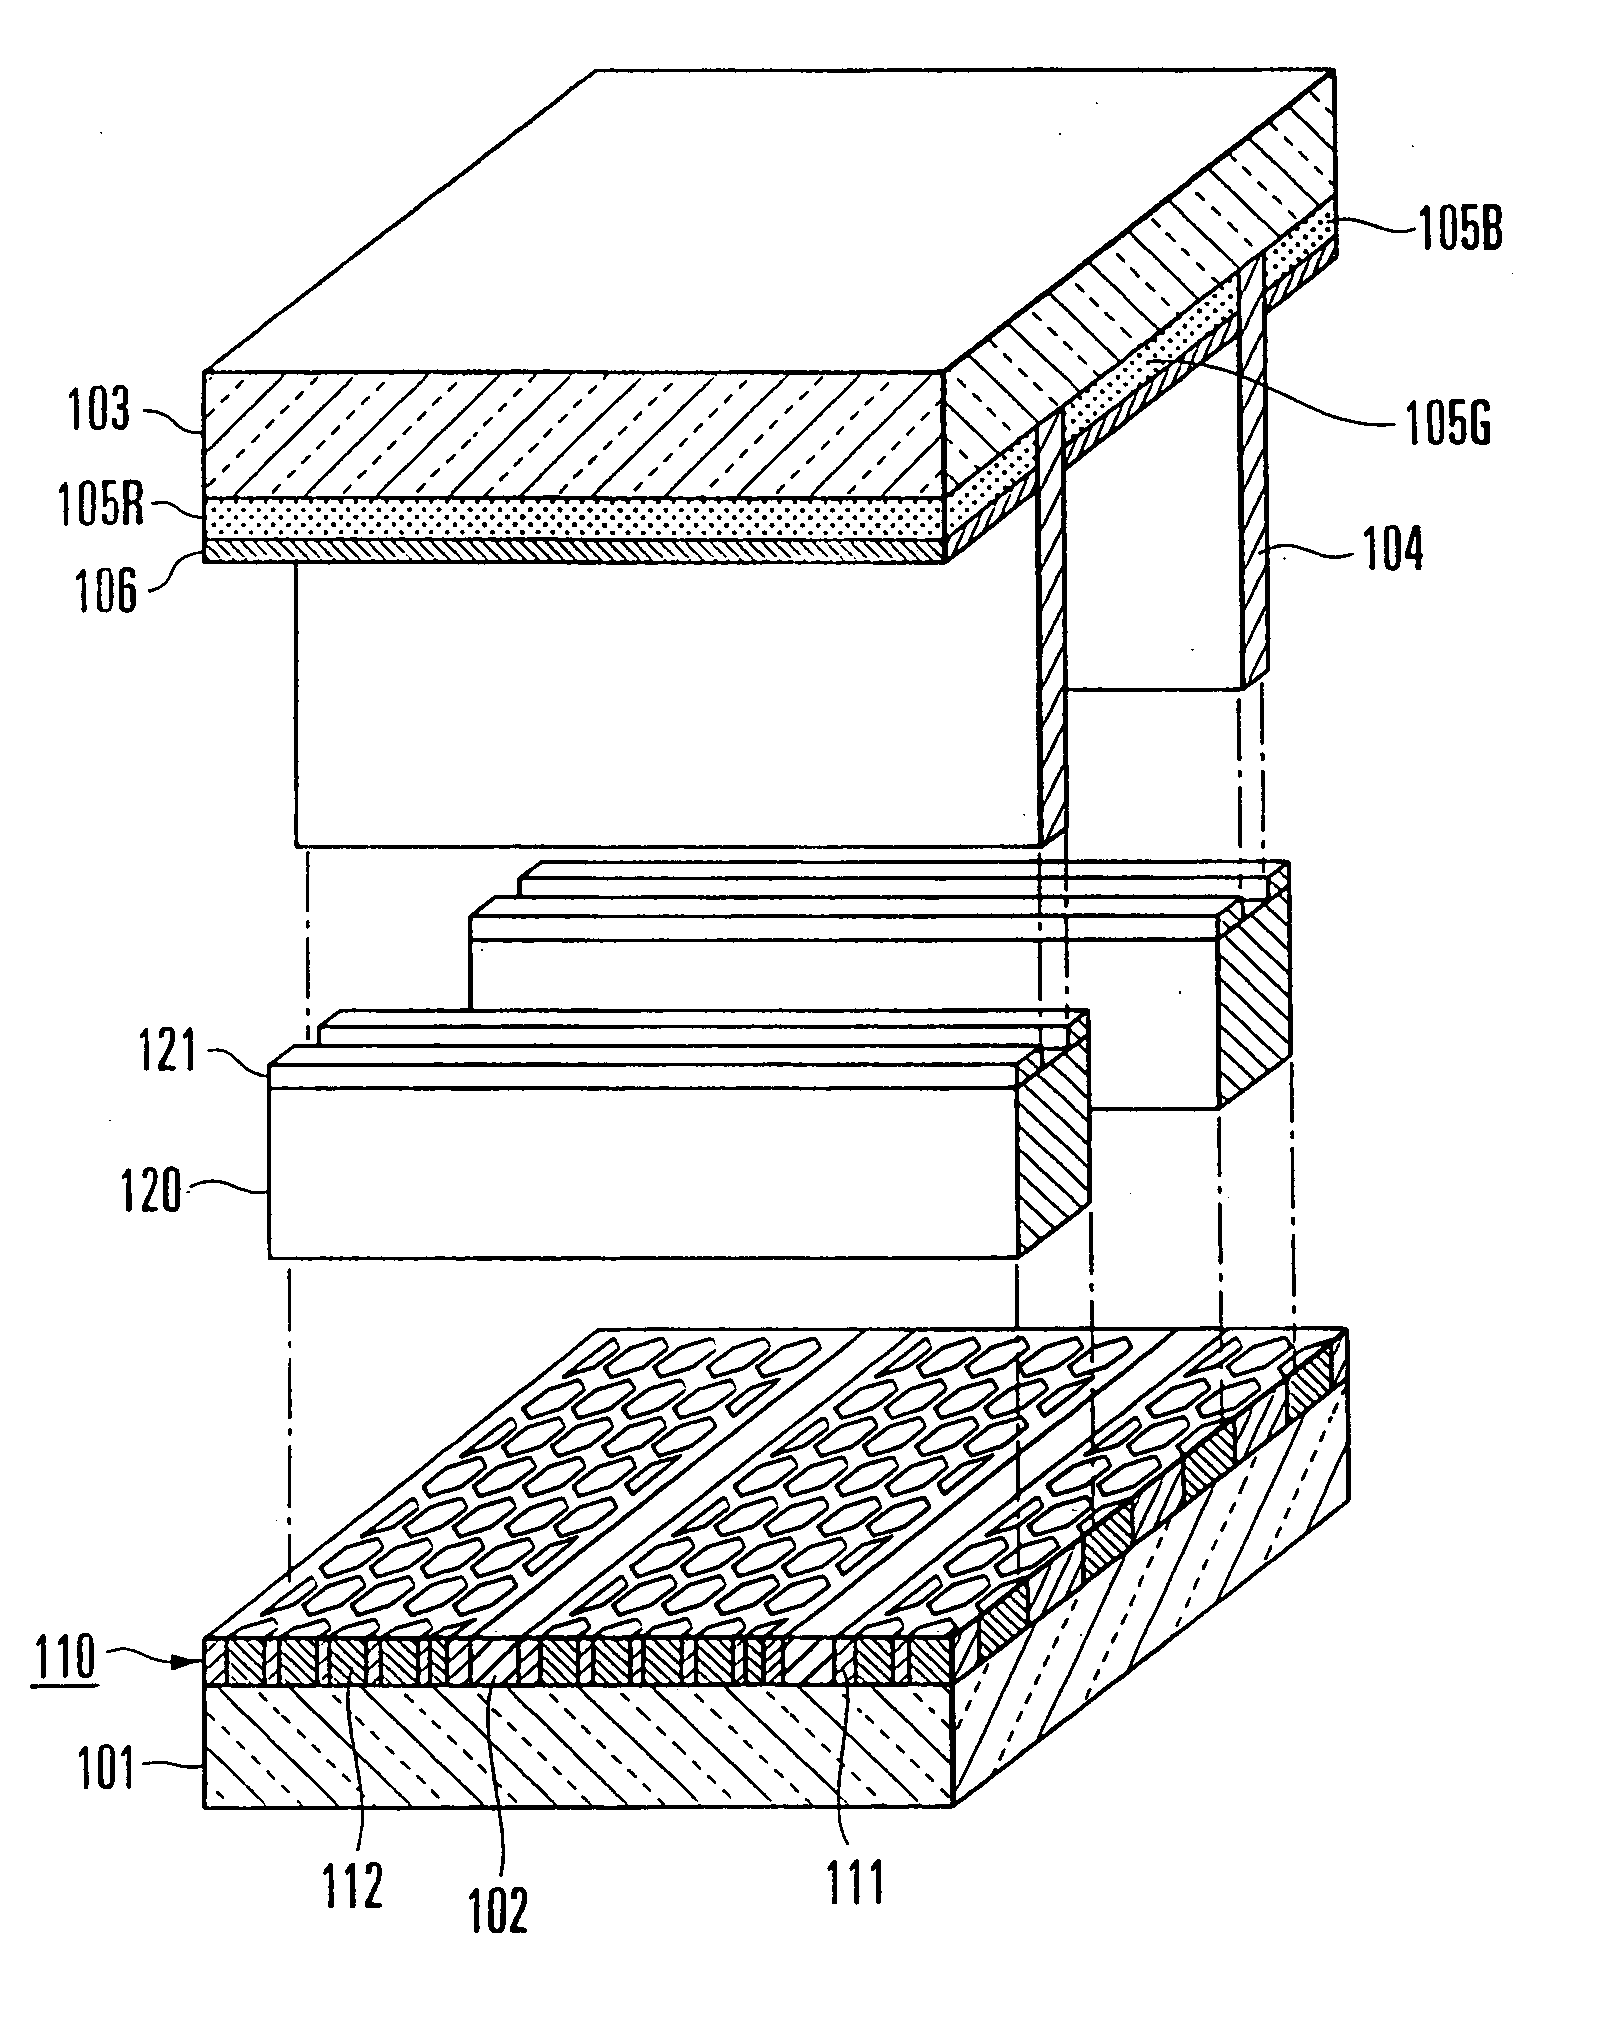 Flat-panel display and flat-panel display cathode manufacturing method